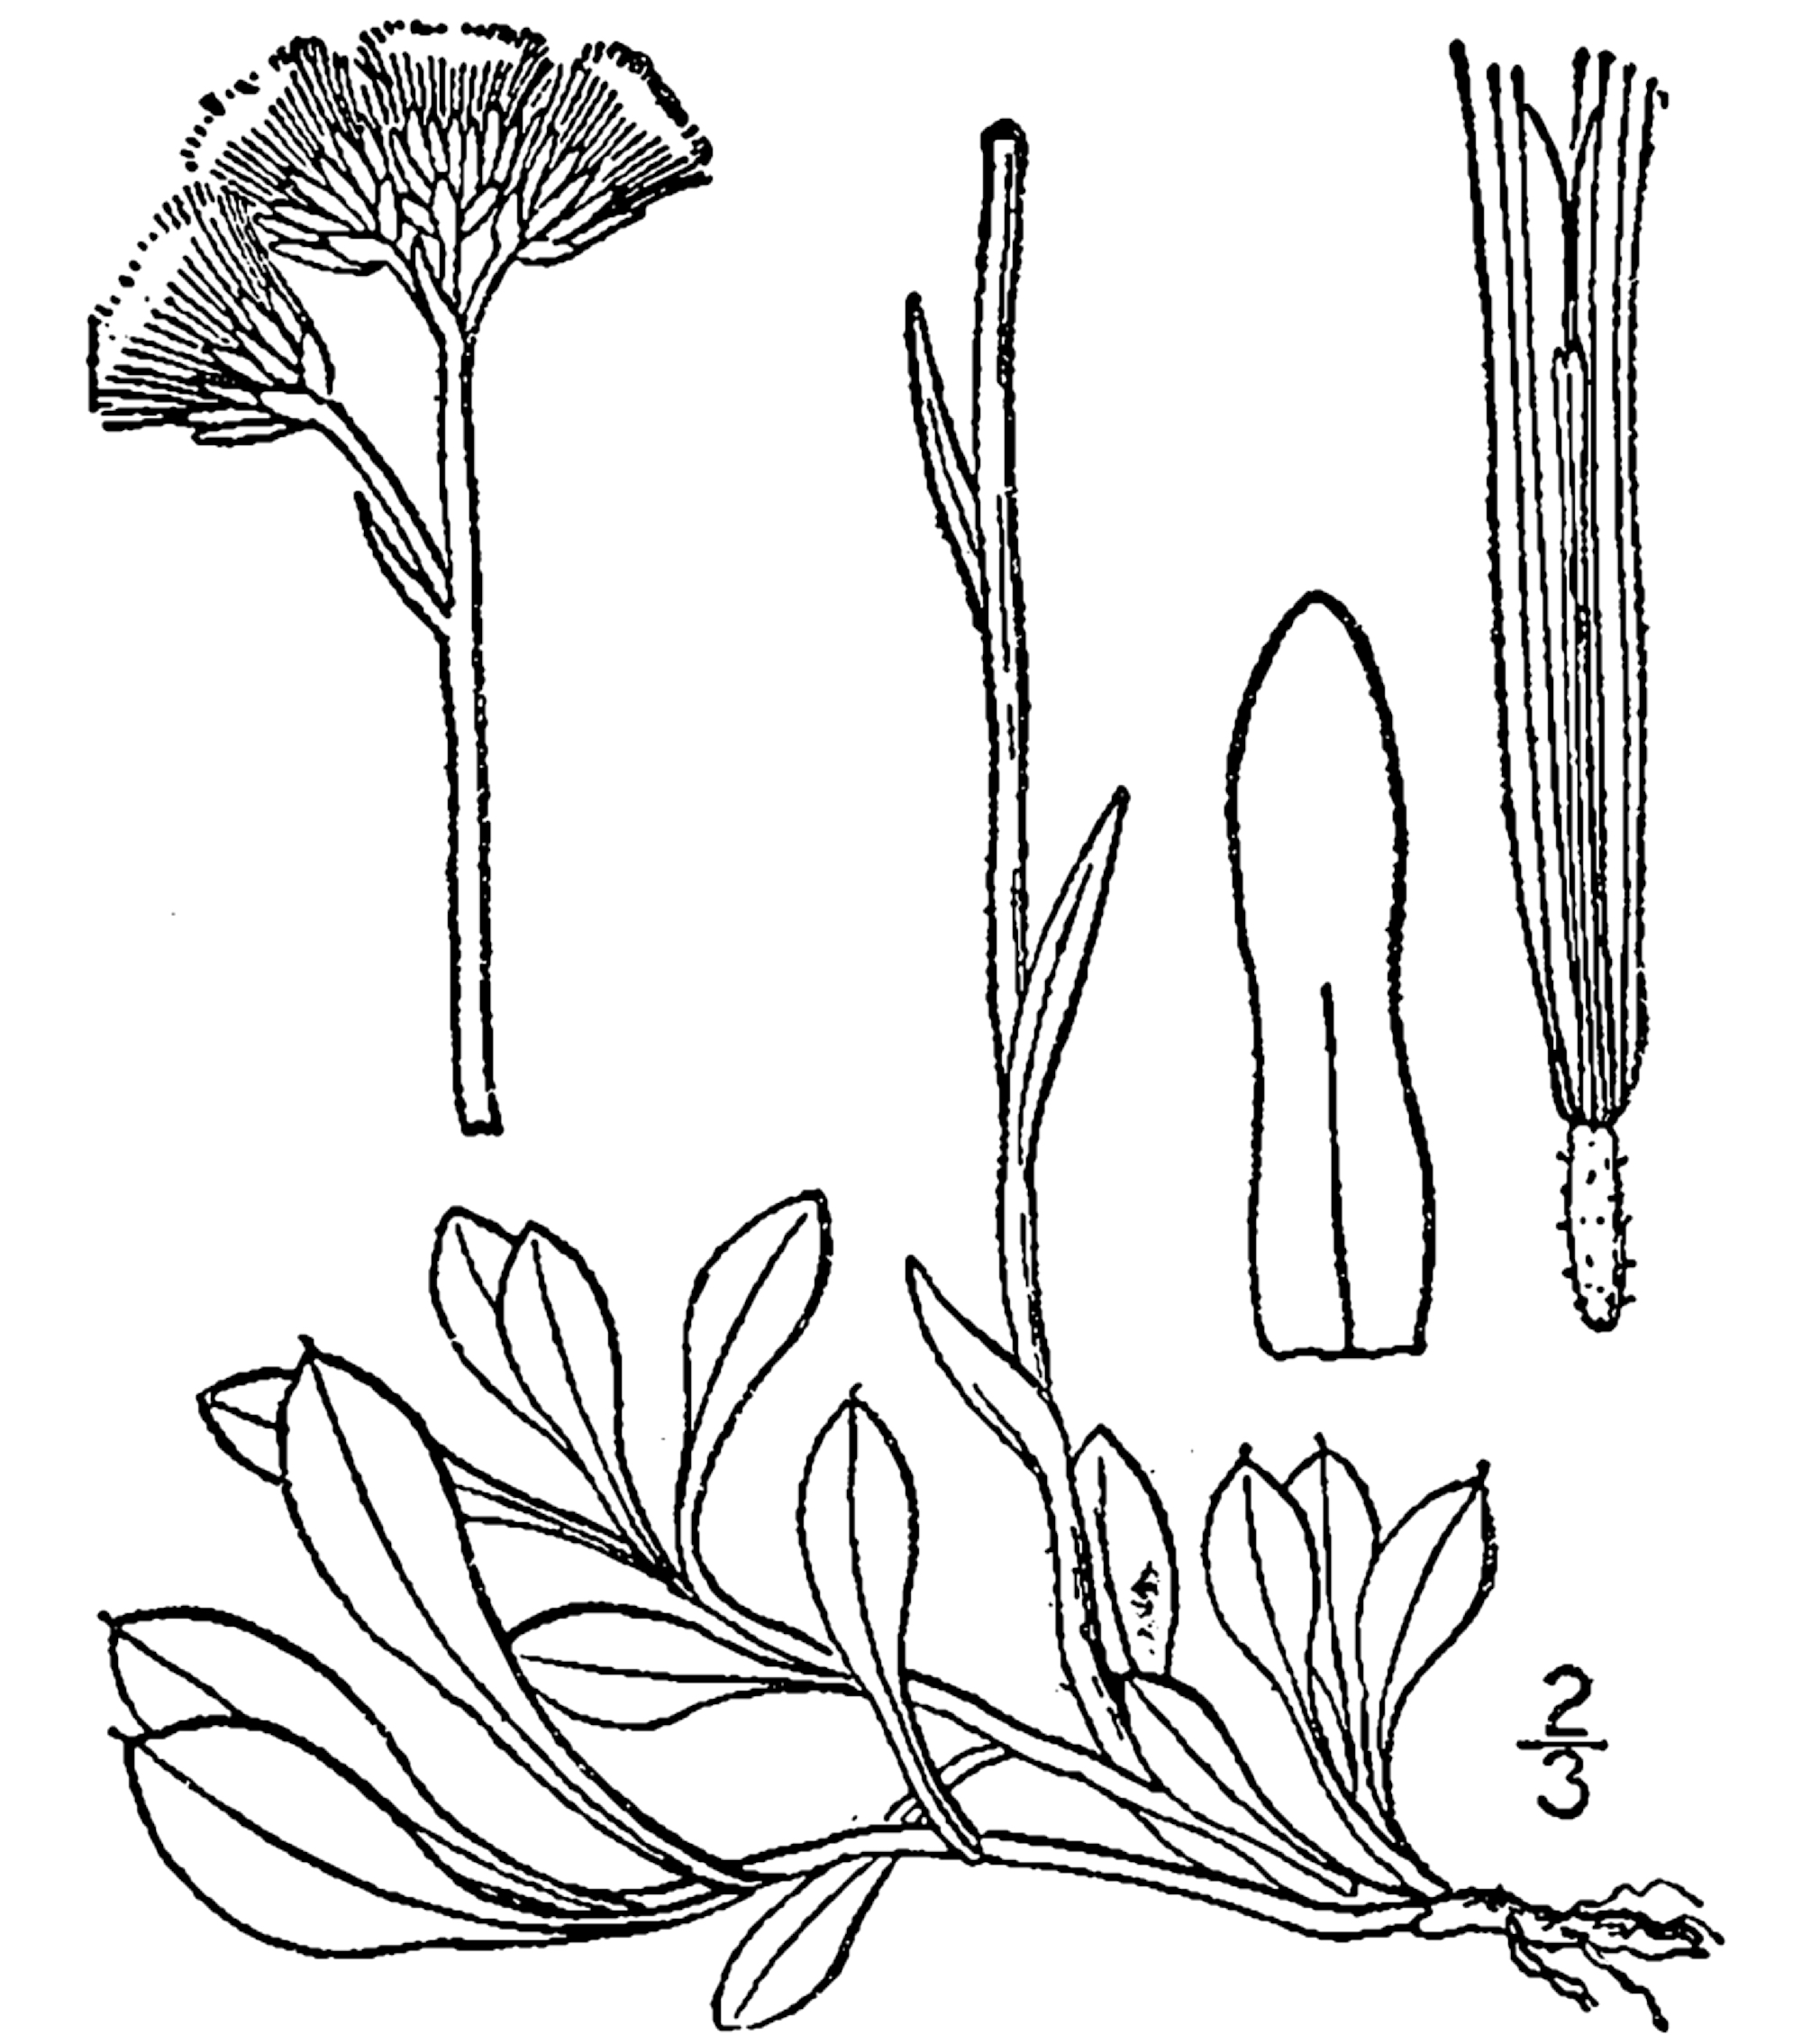 USDA Howell's Pussytoes botanical illustration circa 1913..